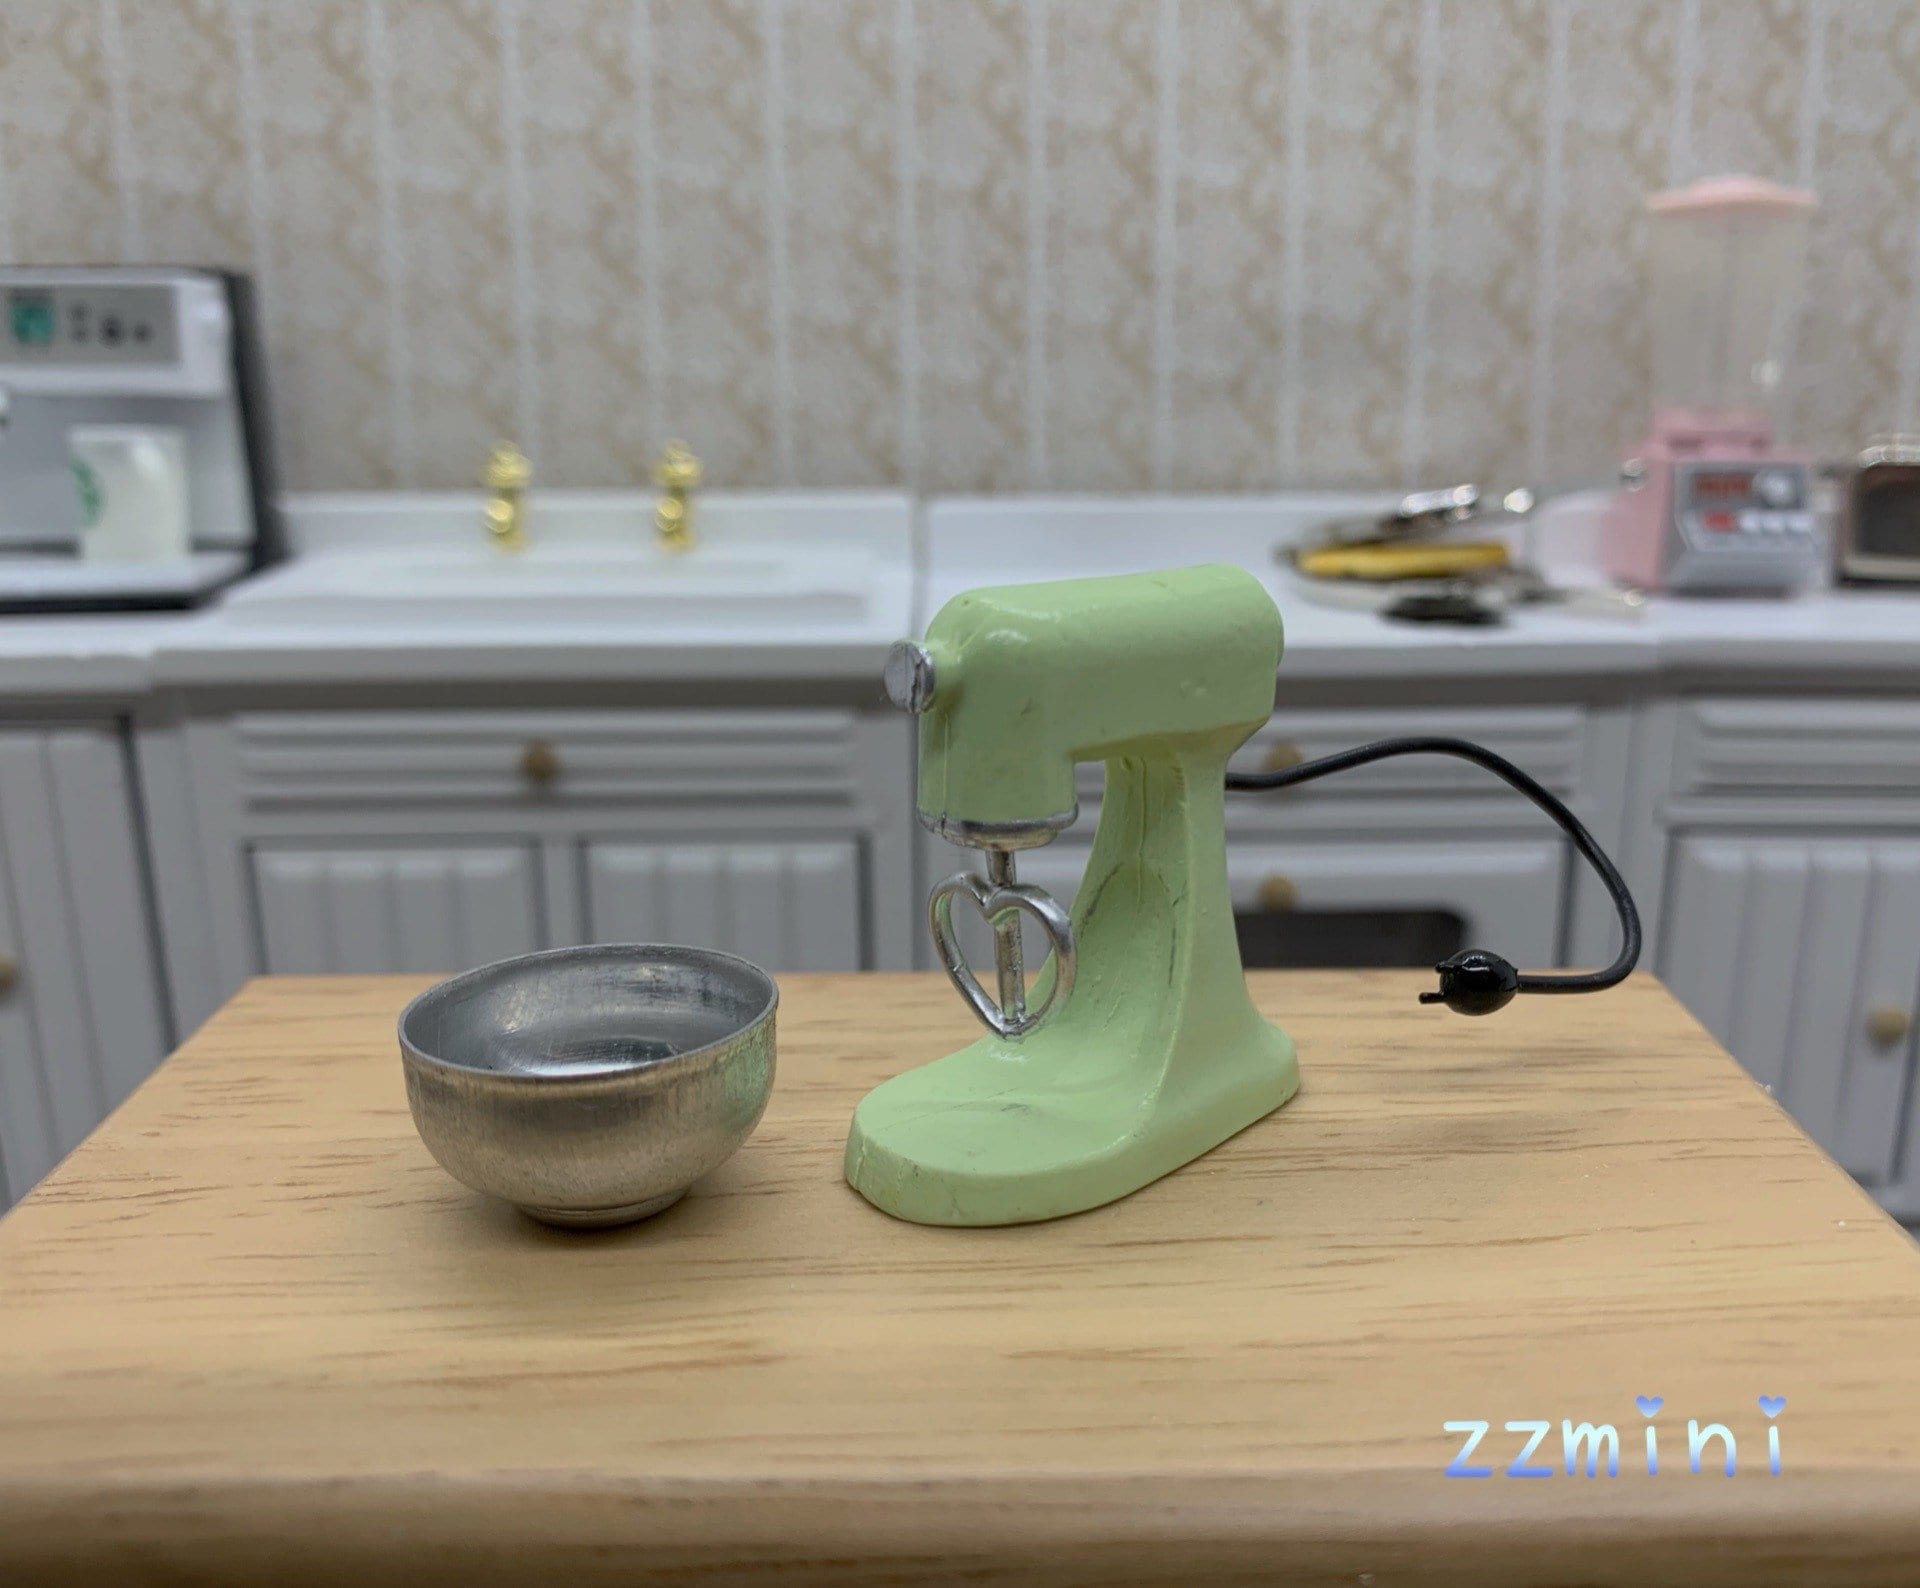 Dollhouse Miniature Toy 1:12 Kitchen A Plastic Green Food Mixers H2.2cm SPO440 